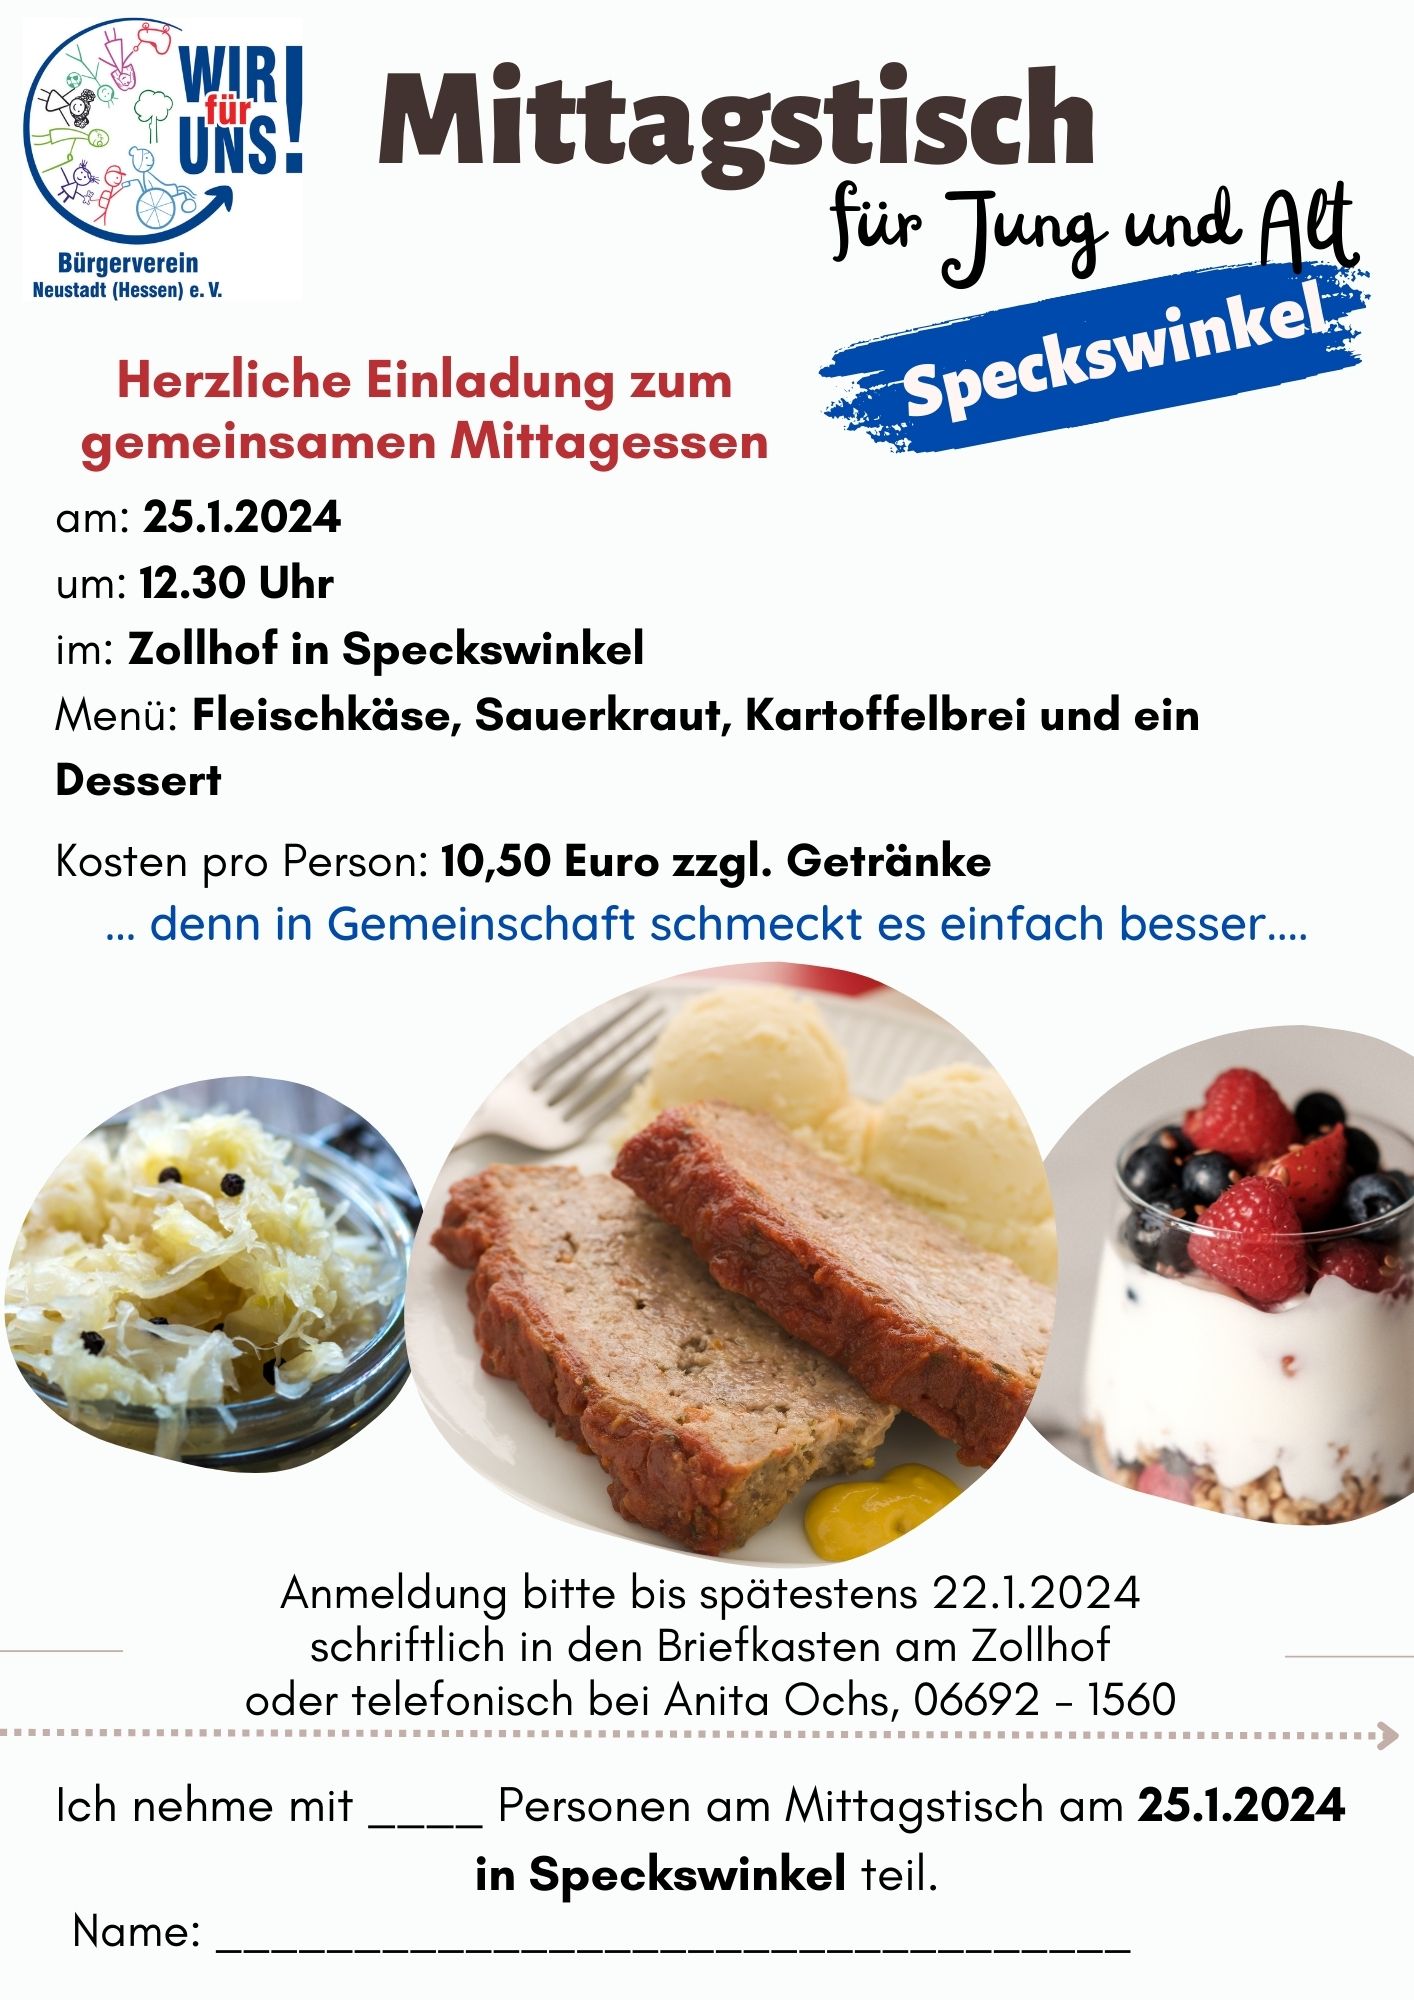 You are currently viewing Mittagstisch in Speckswinkel am 25.1.2024